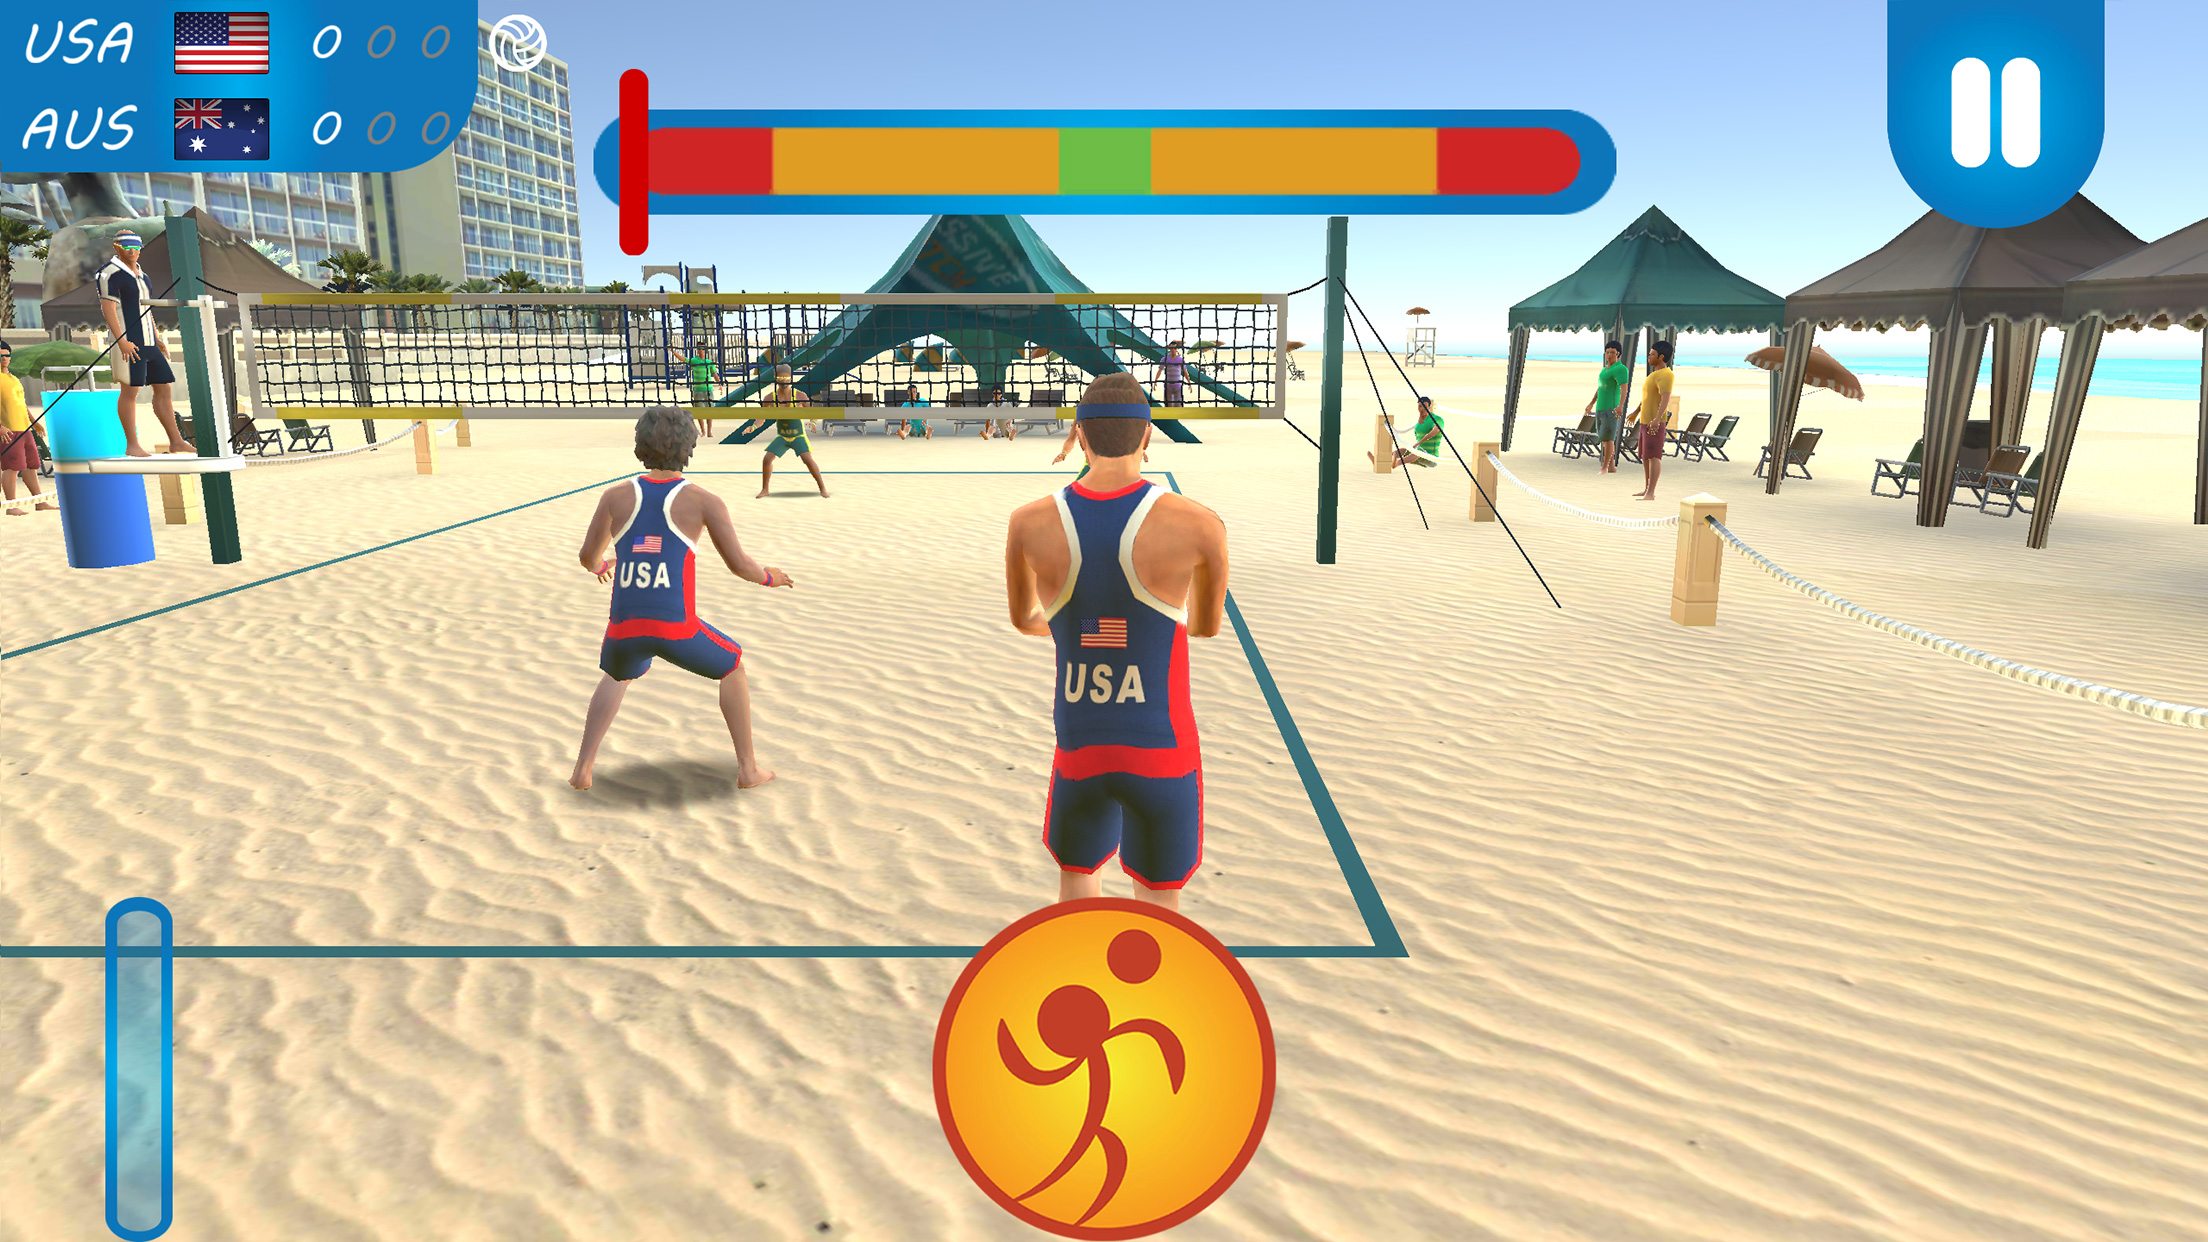 Игра волейбол на телефон. Игра в пляжный волейбол. Игры на пляже. Игра волейбол на ПК. Симулятор волейбола.